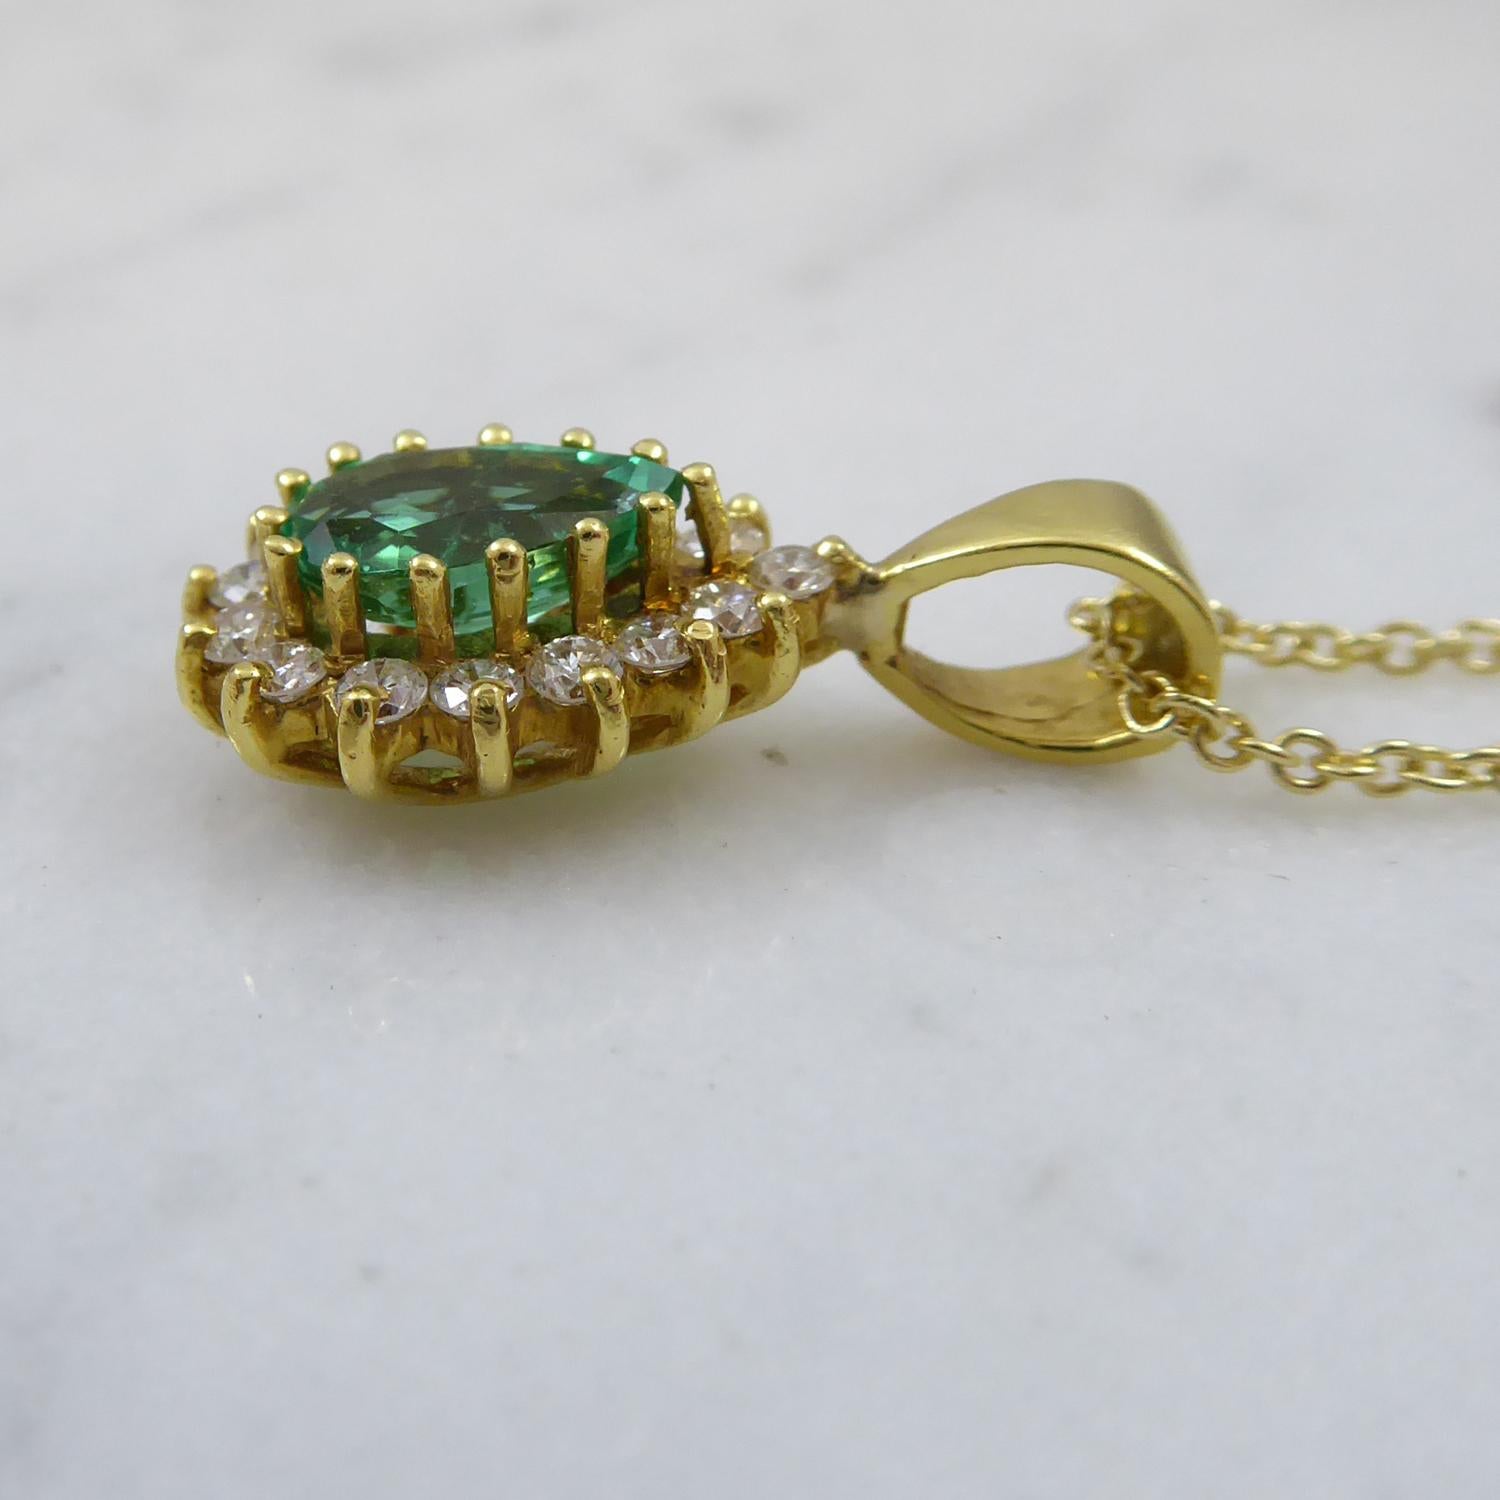 Pear Cut 0.73 Carat Pear-Shaped Emerald Pendant in Diamond Surround, Yellow Gold 